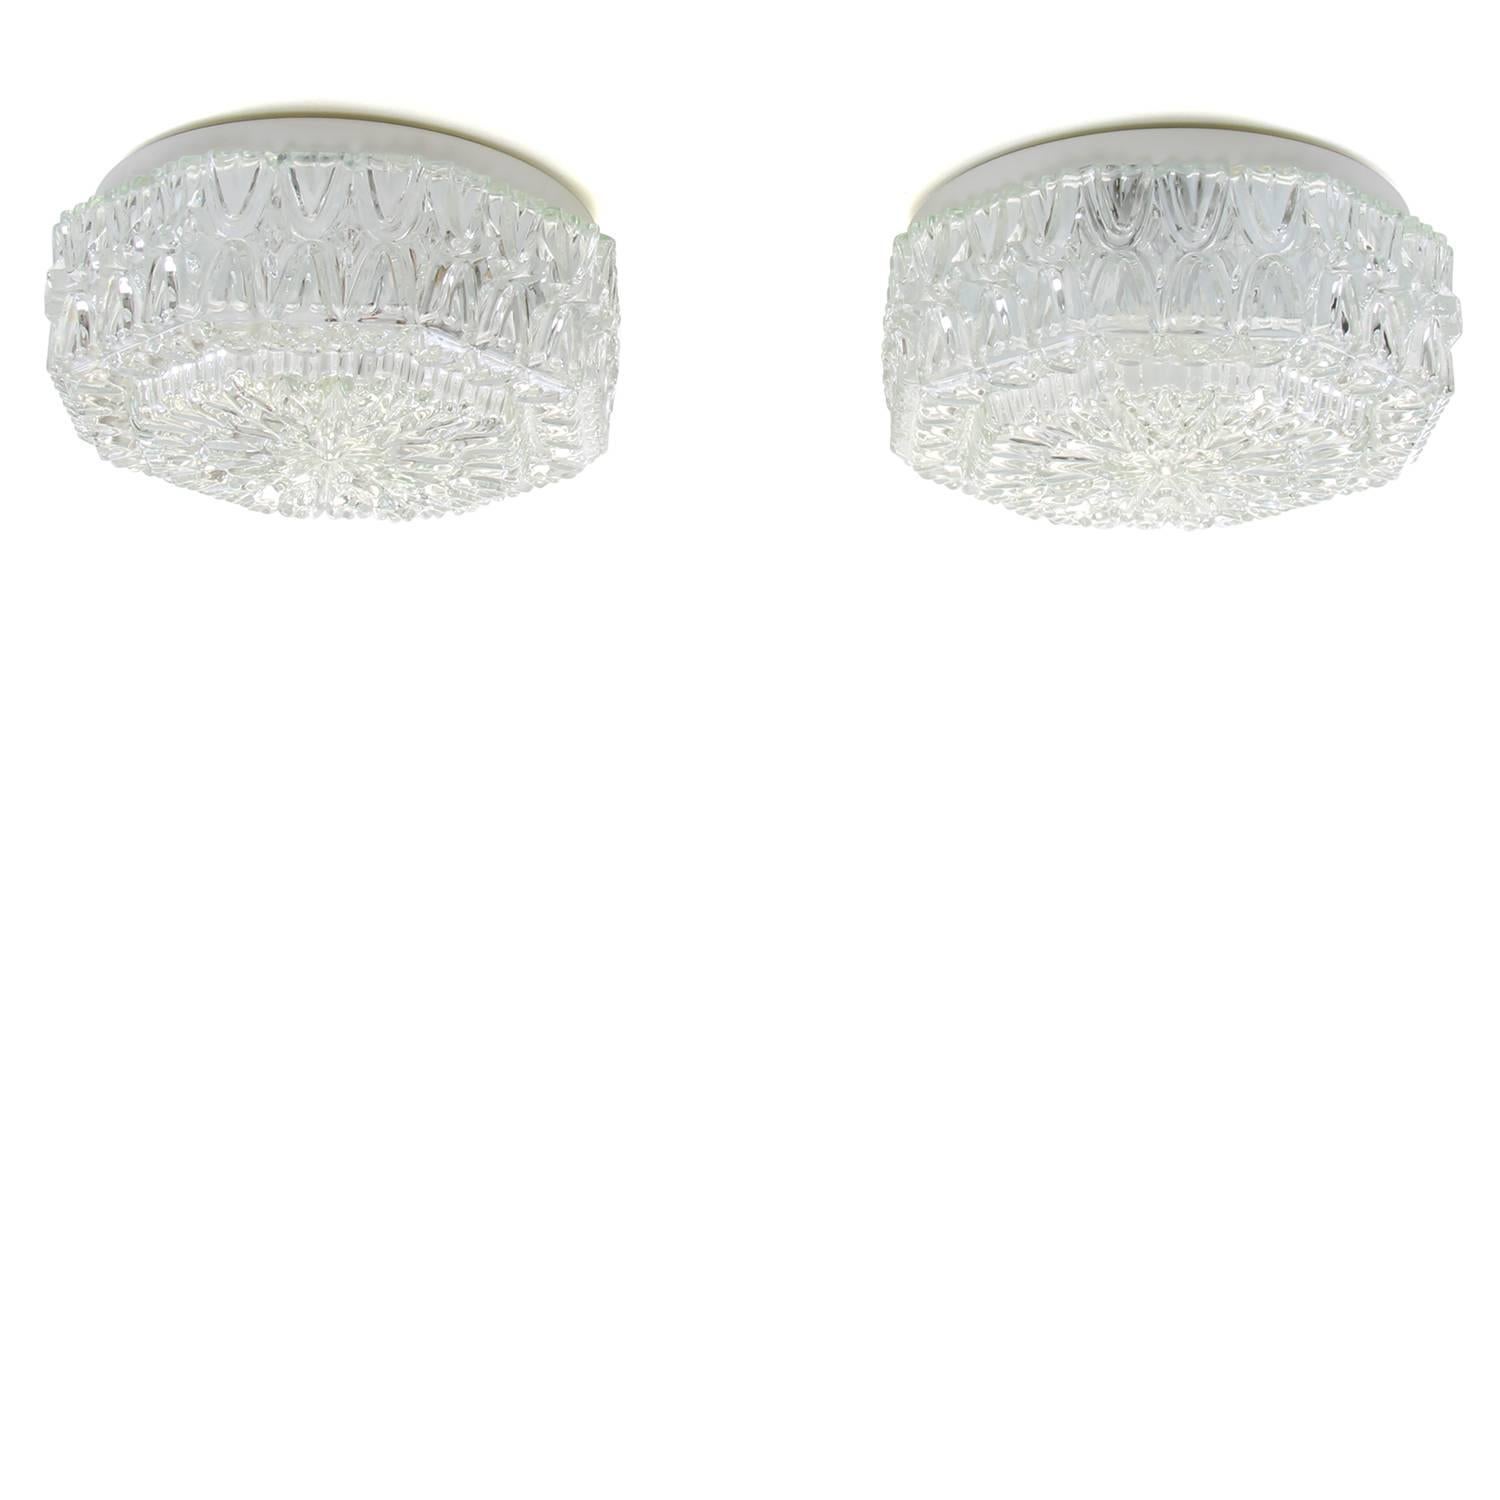 Mid-Century Modern Pressed Glass Flush, Pair of Ceiling Flush Lights, 1960s Vintage Flush Lights